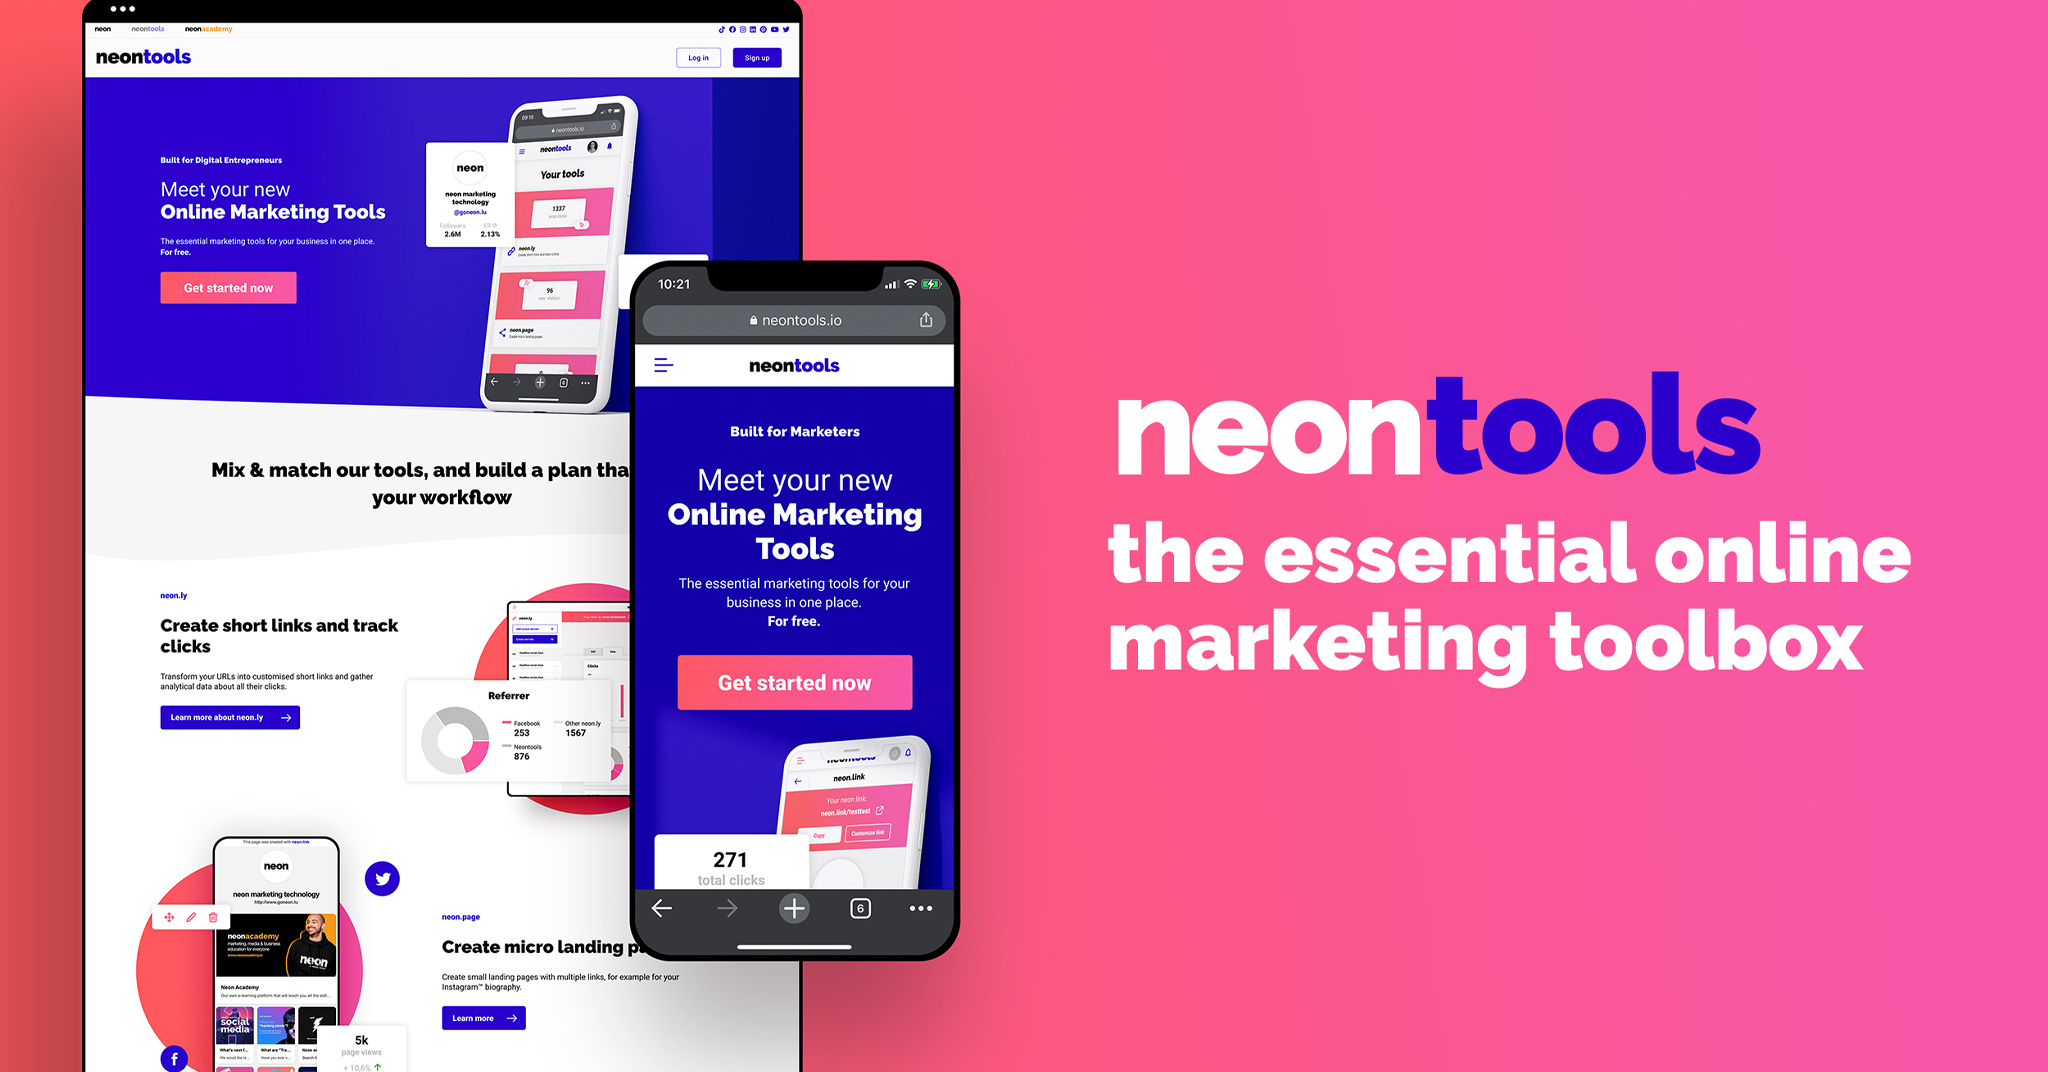 neontools.io marketing toolbox